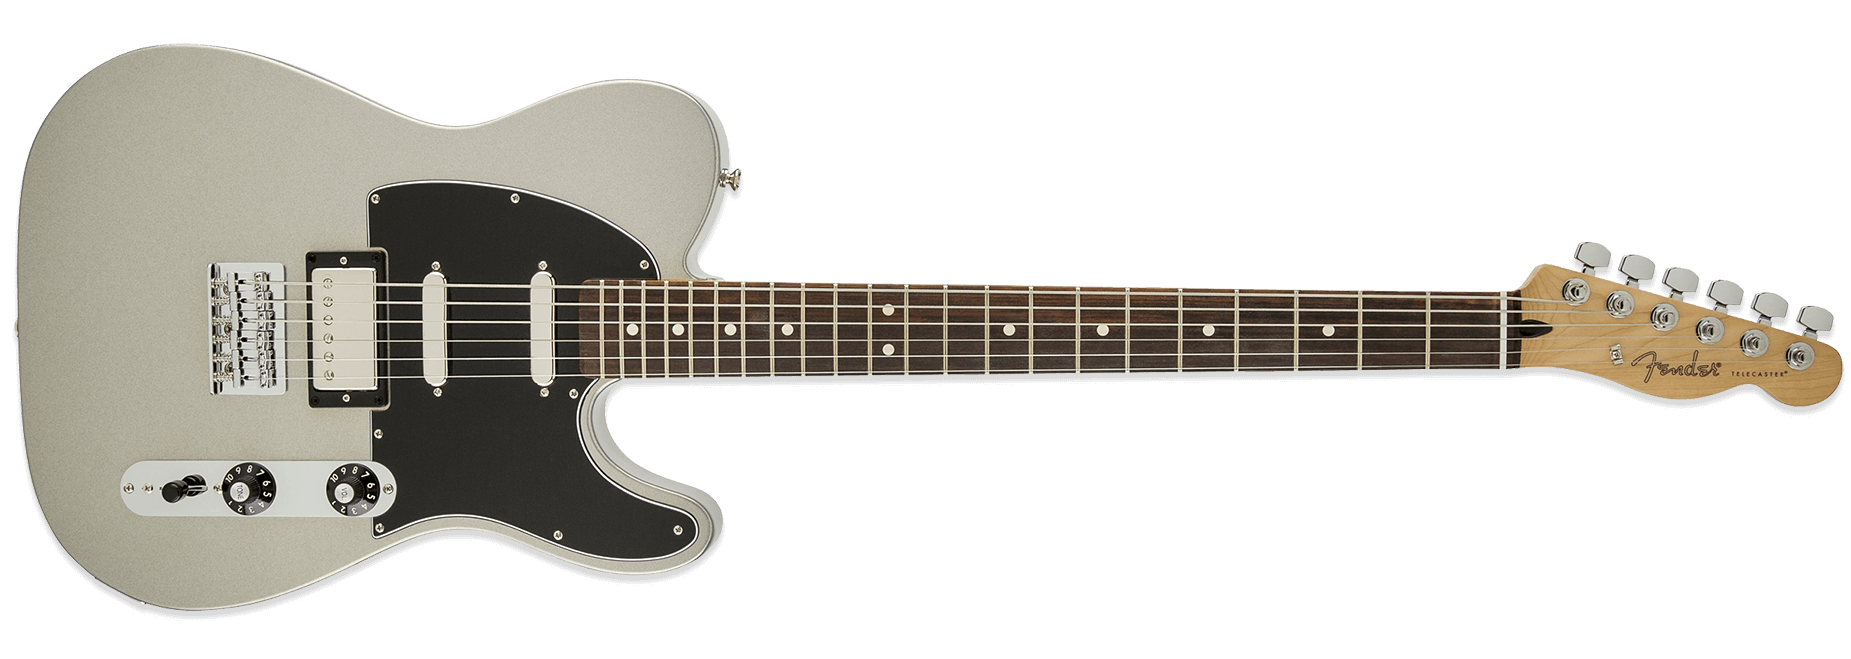 Fender Blacktop Telecaster Baritone Ghost Silver